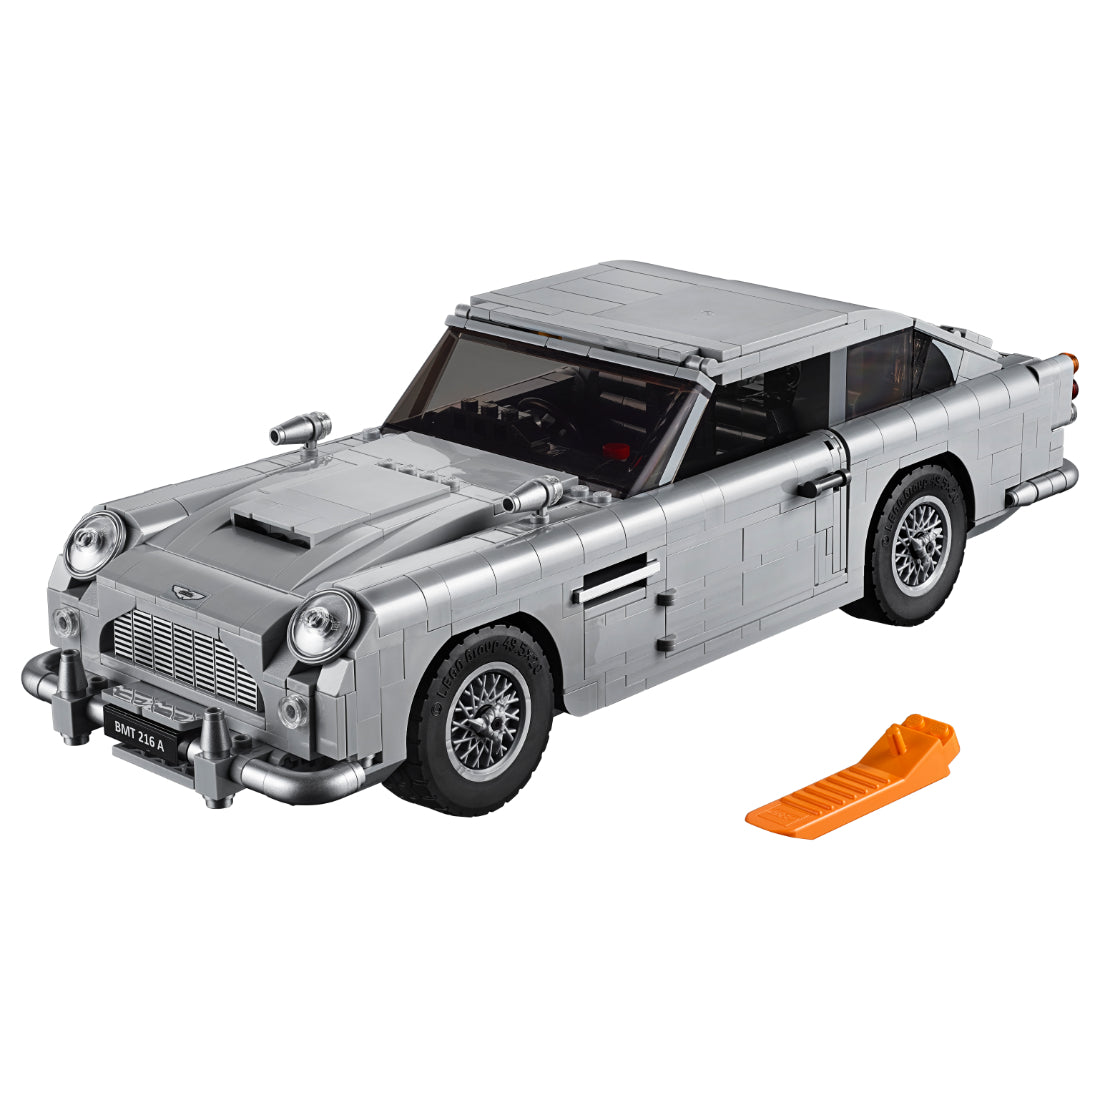 LEGO® Creator Expert James Bond™ Aston Martin DB5 (10262)